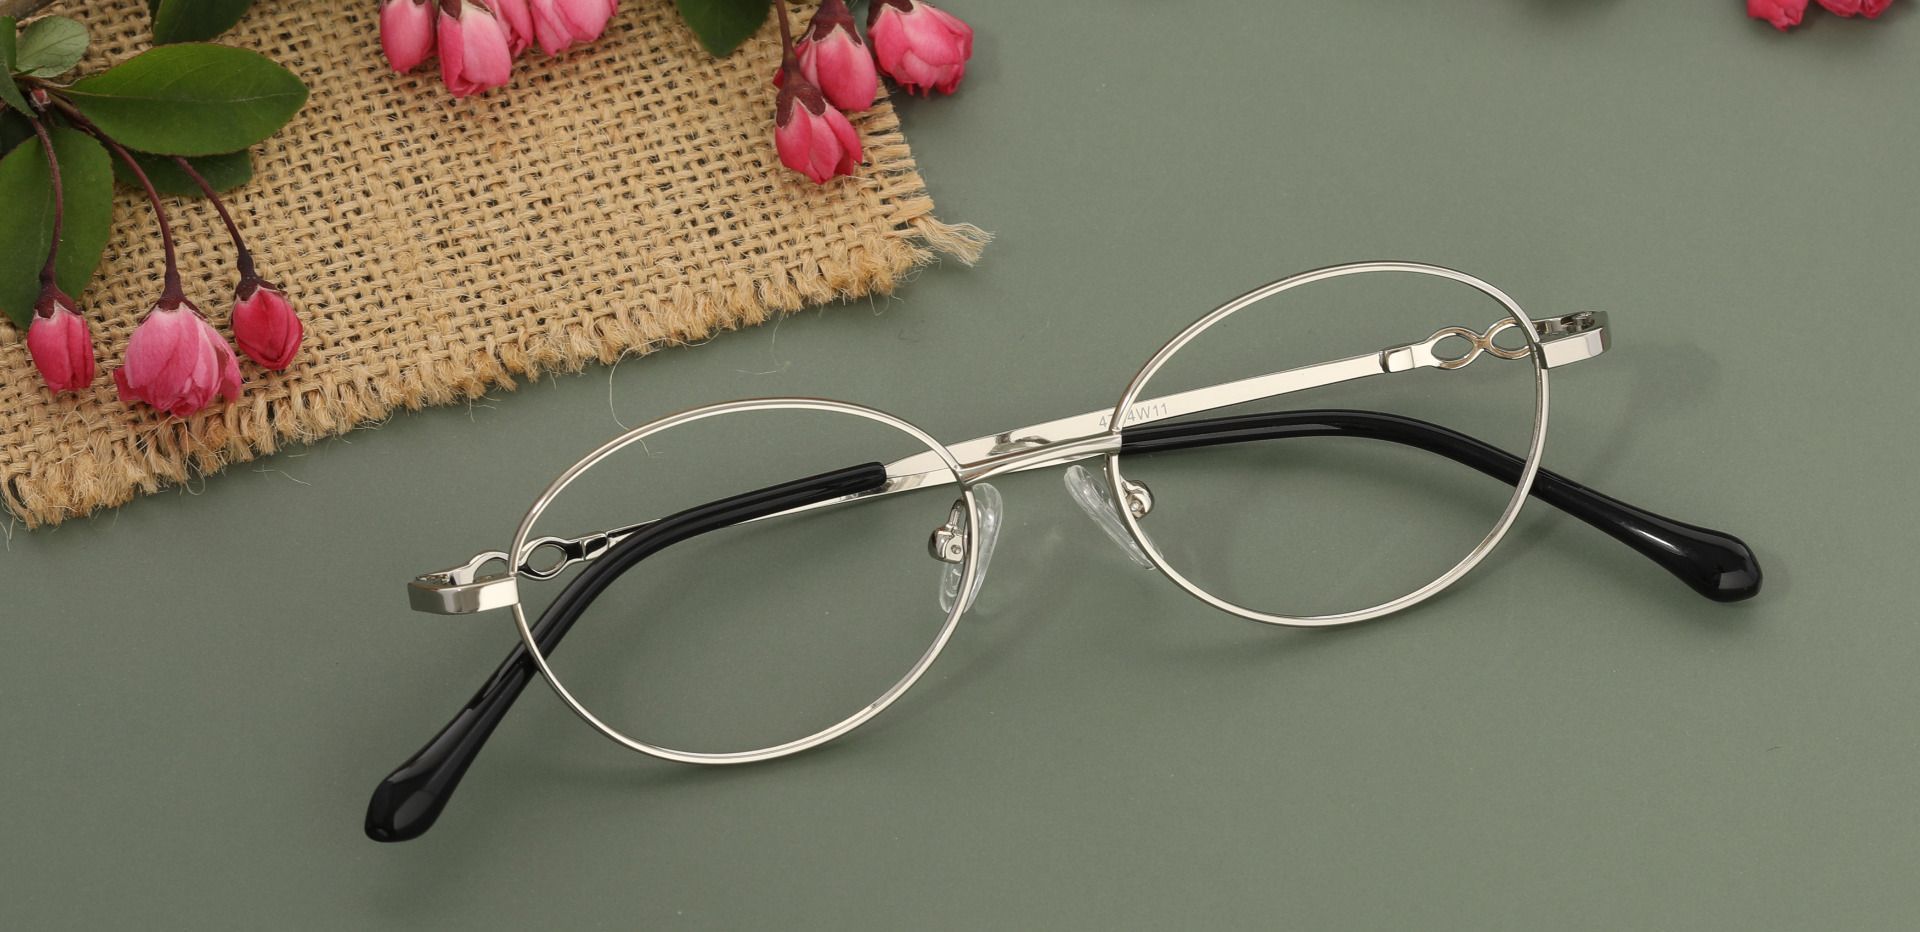 Odyssey Oval Prescription Glasses - Silver